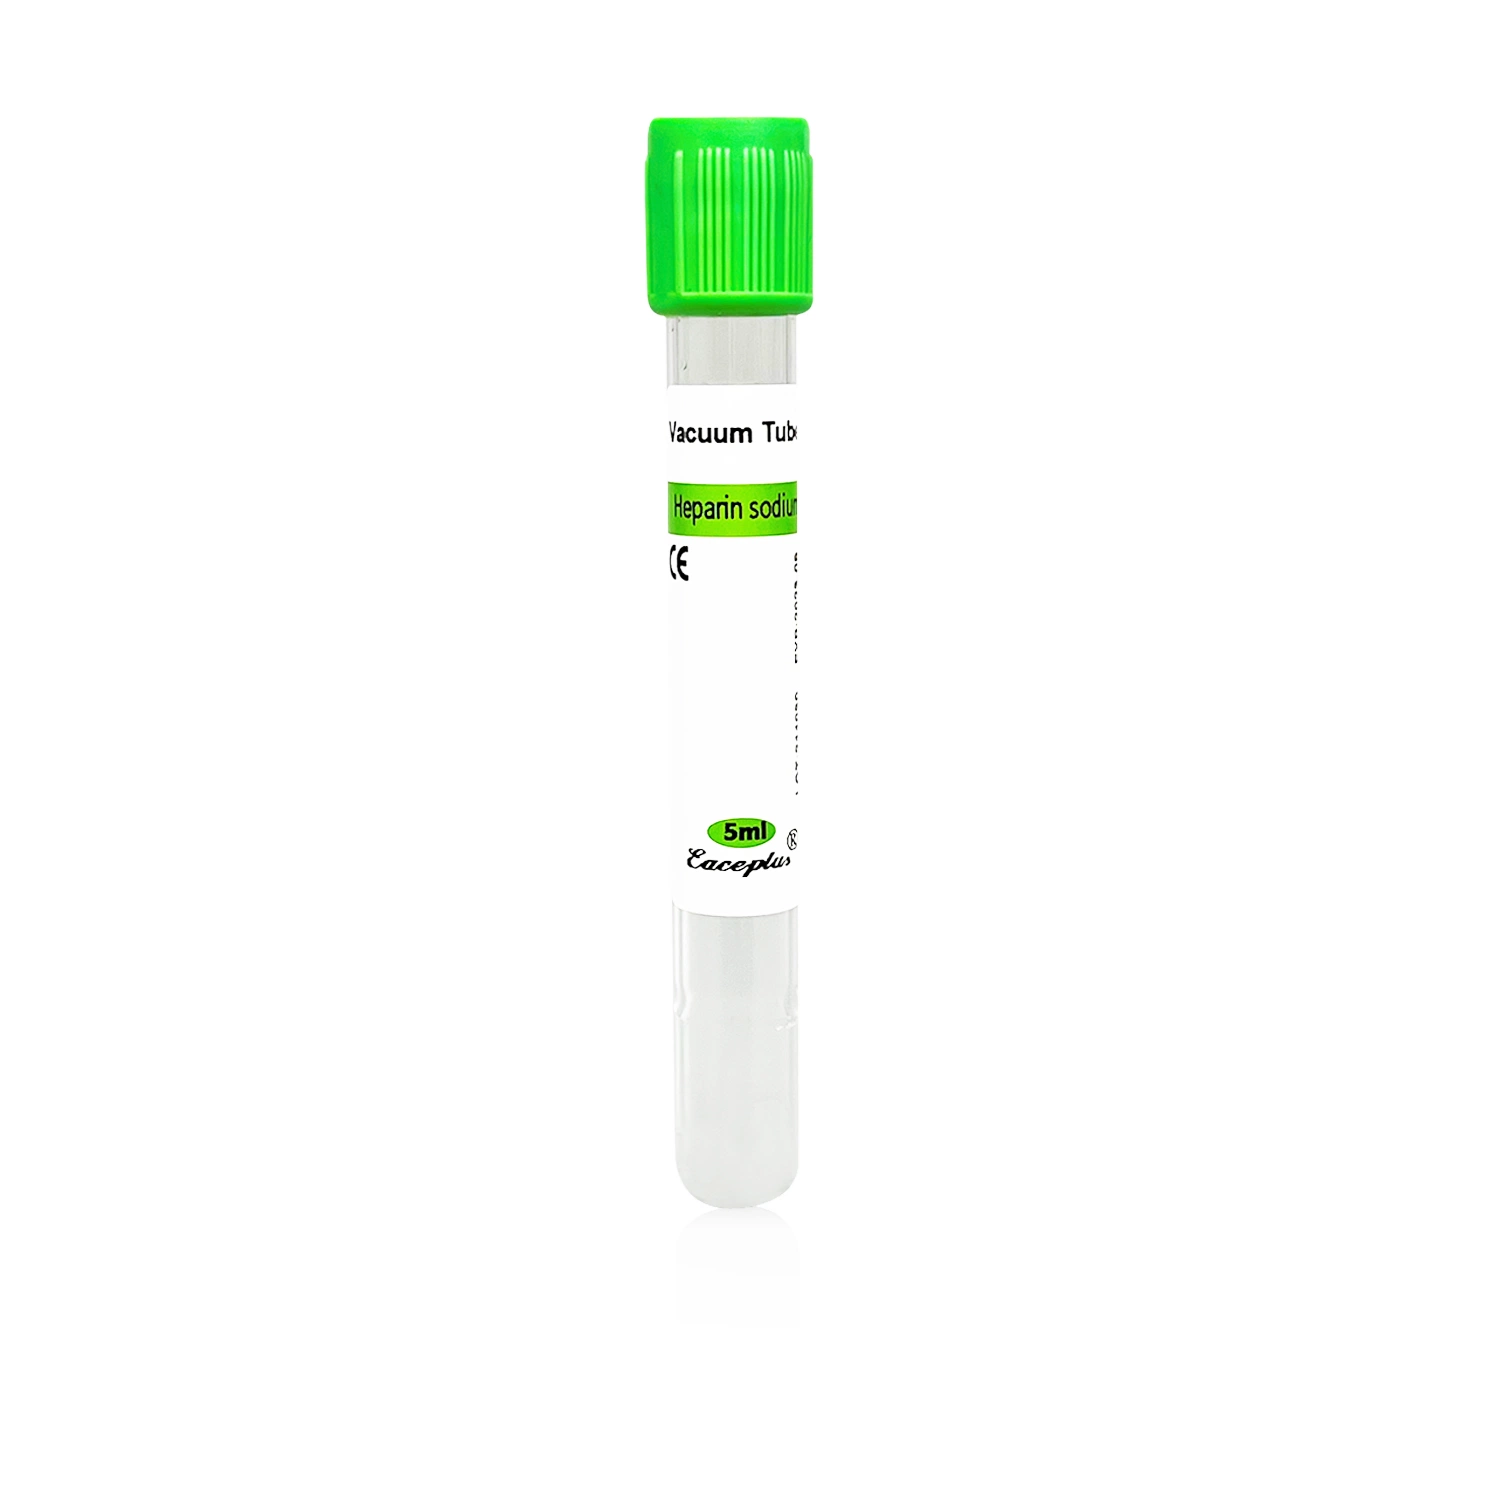 Siny Manufacture Heparin Lithium Sodium No Additive Tube Medical Disposables Vacuum Blood Test Tube